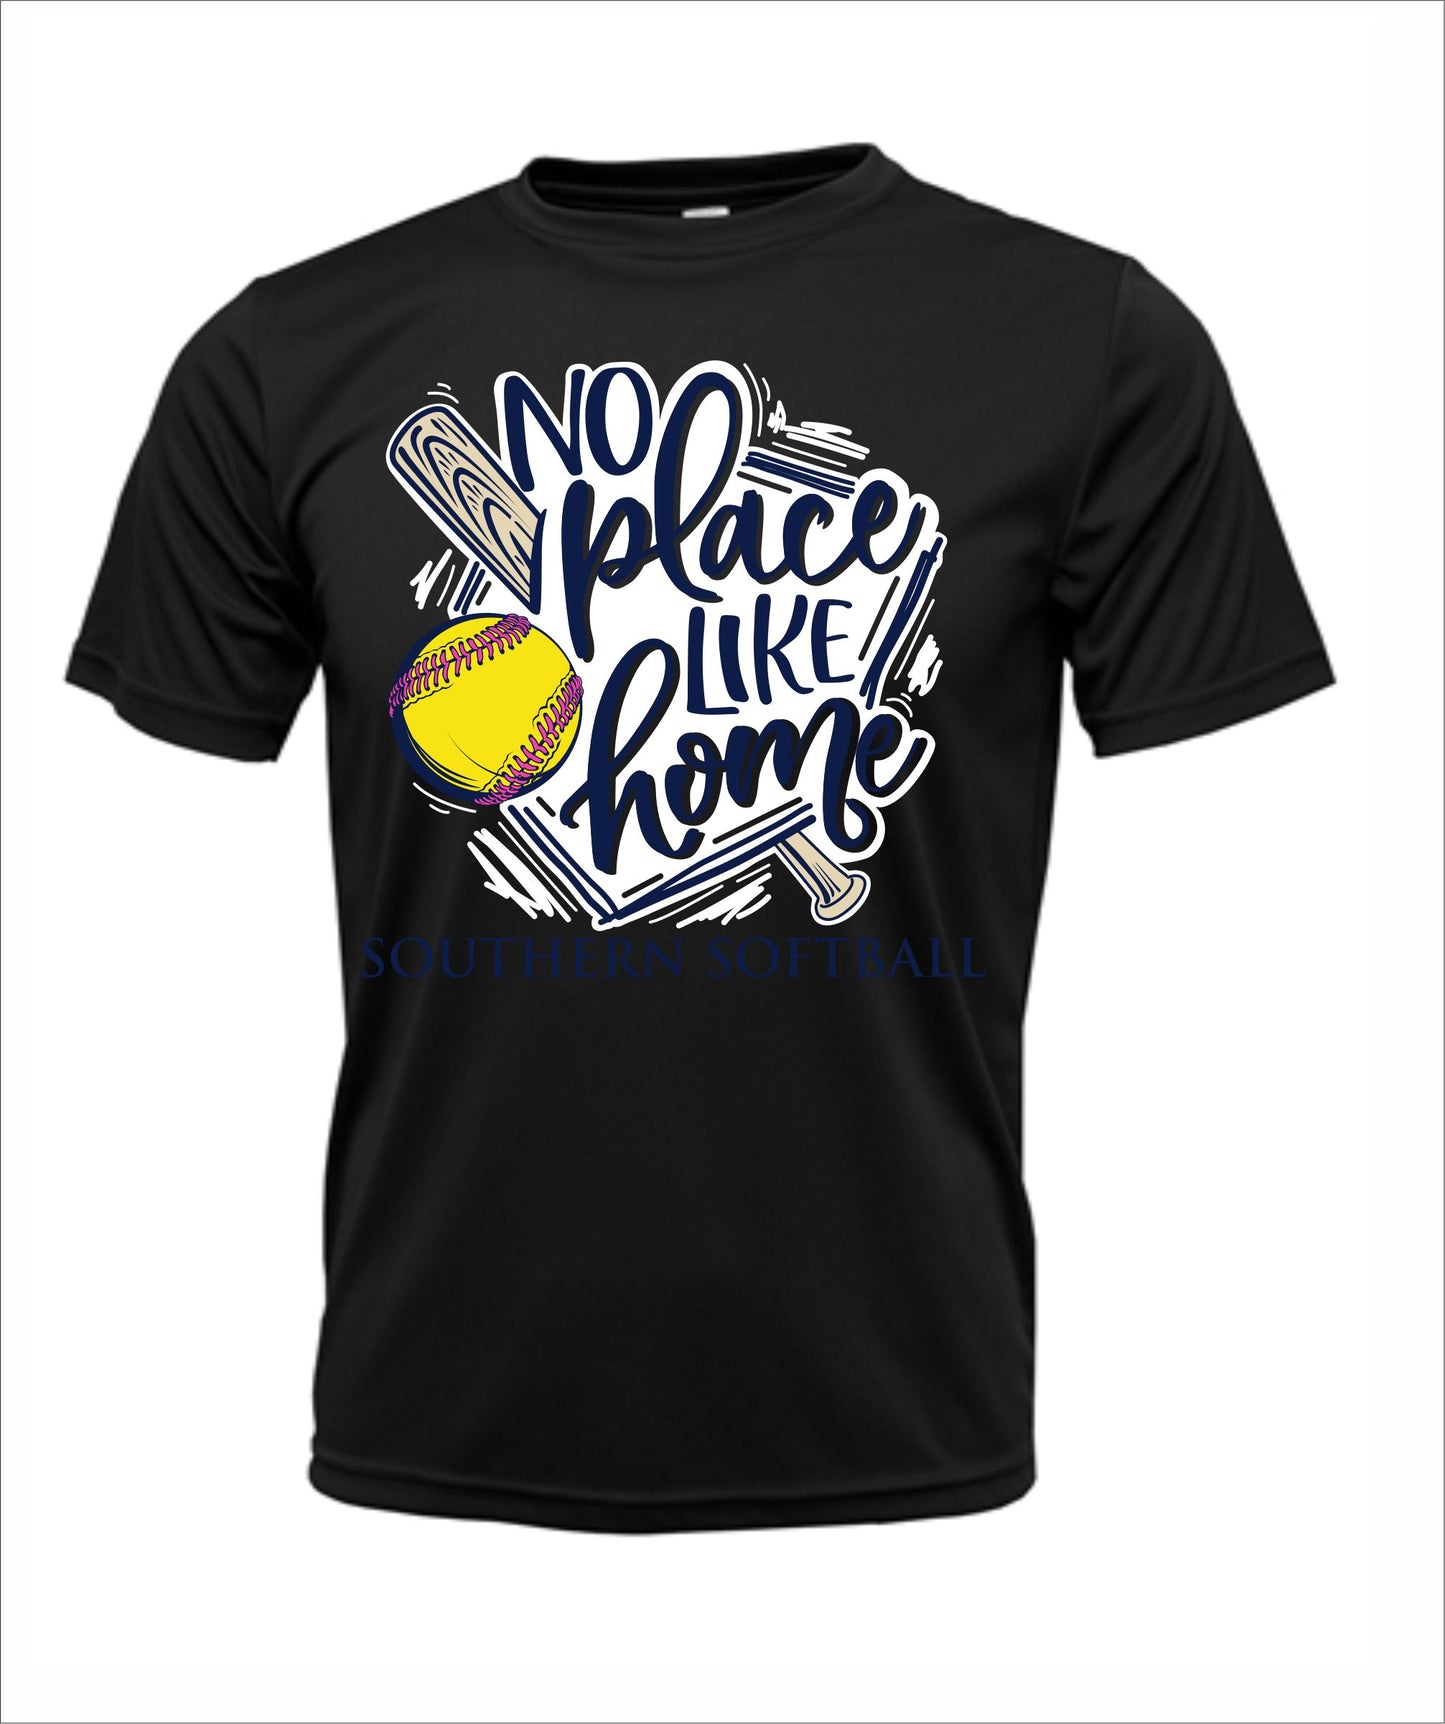 Softball "No Place Like Home" Cotton T-Shirt